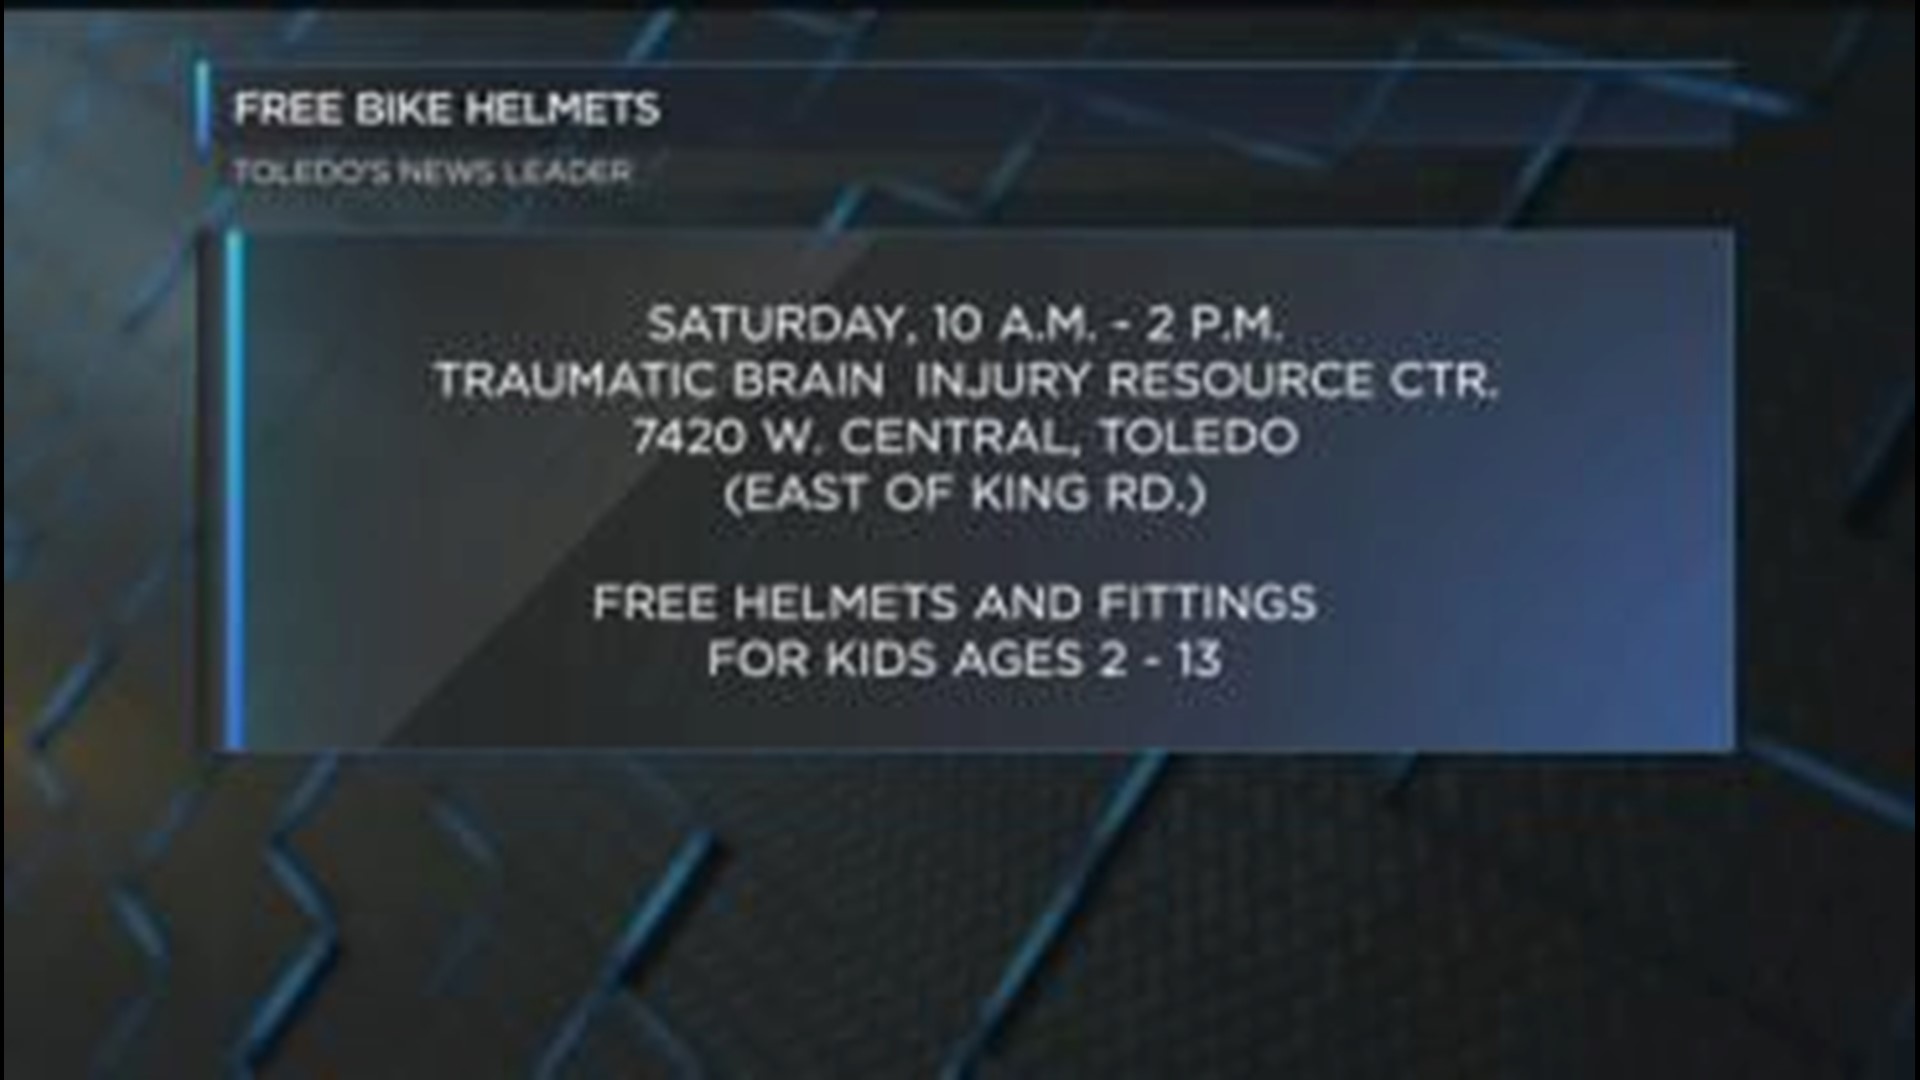 Boyk Law Bikes for Kids giving away free bike helmets this weekend